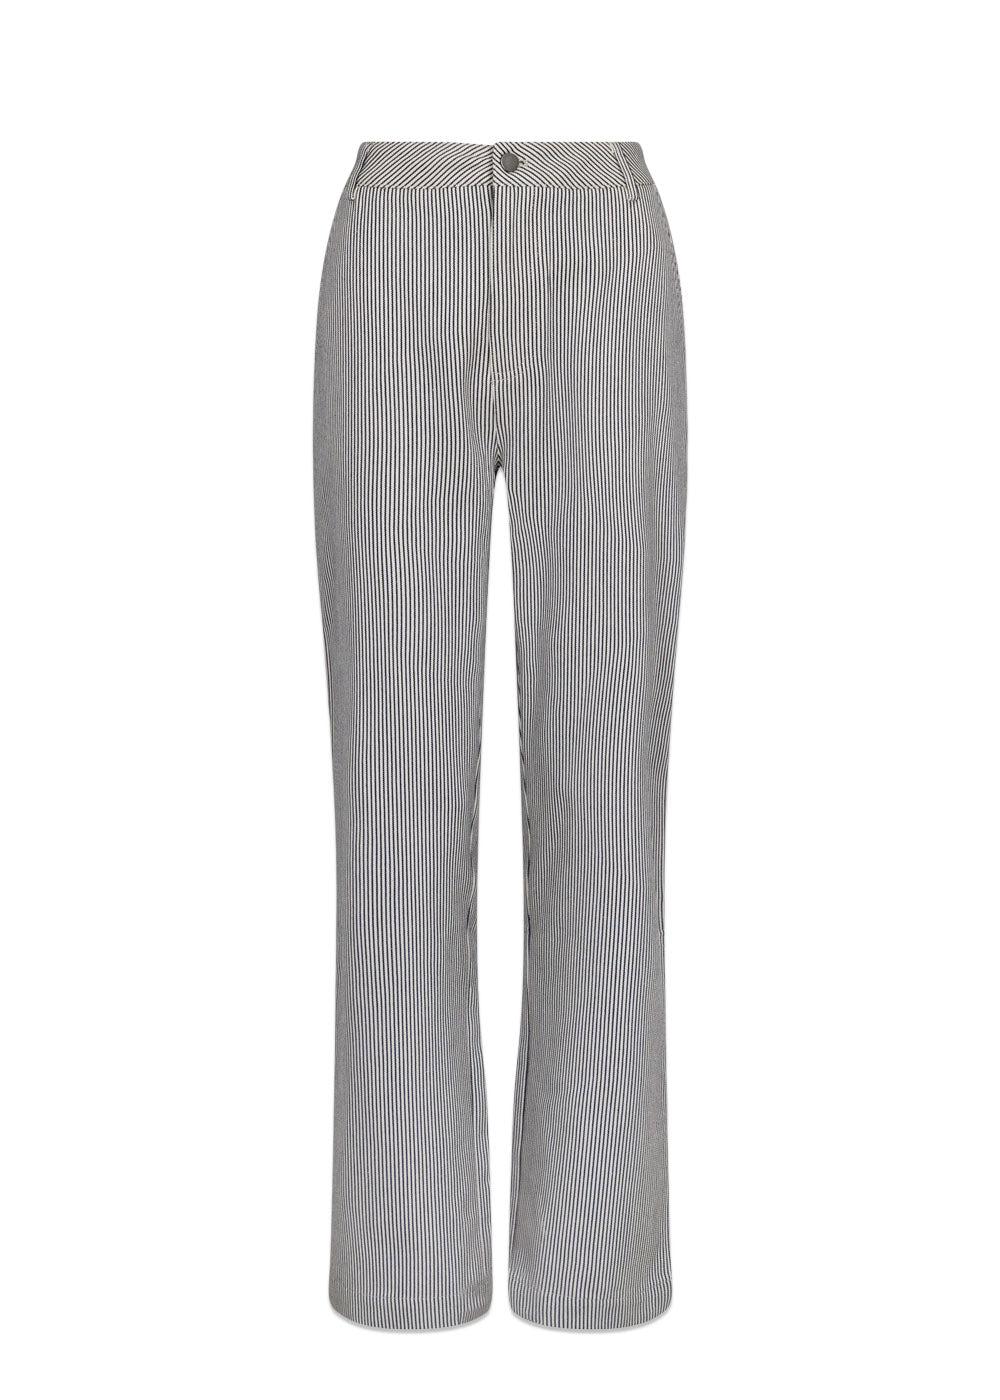 Neo Noirs Zuzan Stripe Pants - Off White. Køb bukser her.